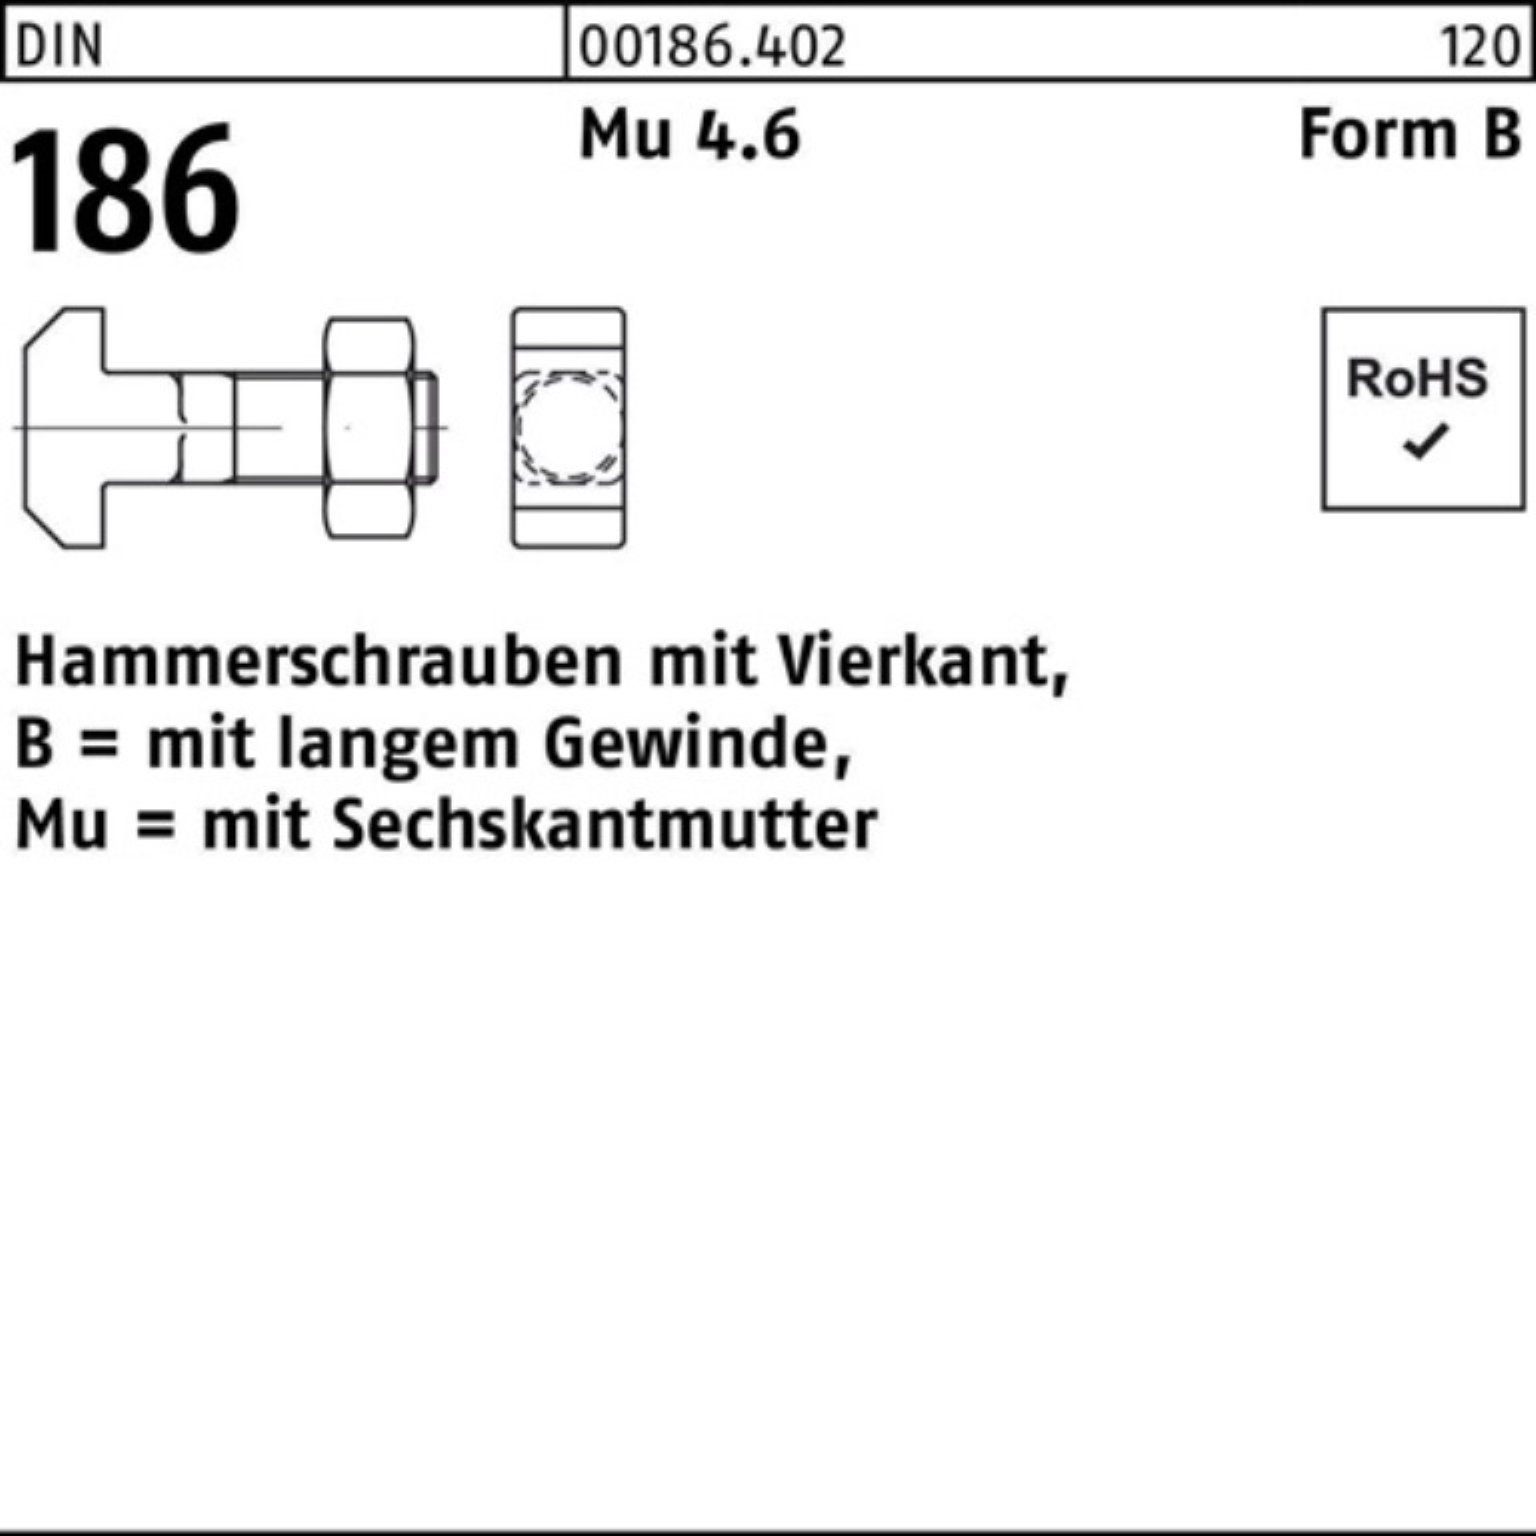 Reyher Schraube 100er Pack Hammerschraube DIN 186 FormB Vierkant 6-ktmutter BM 24x 120 | Schrauben